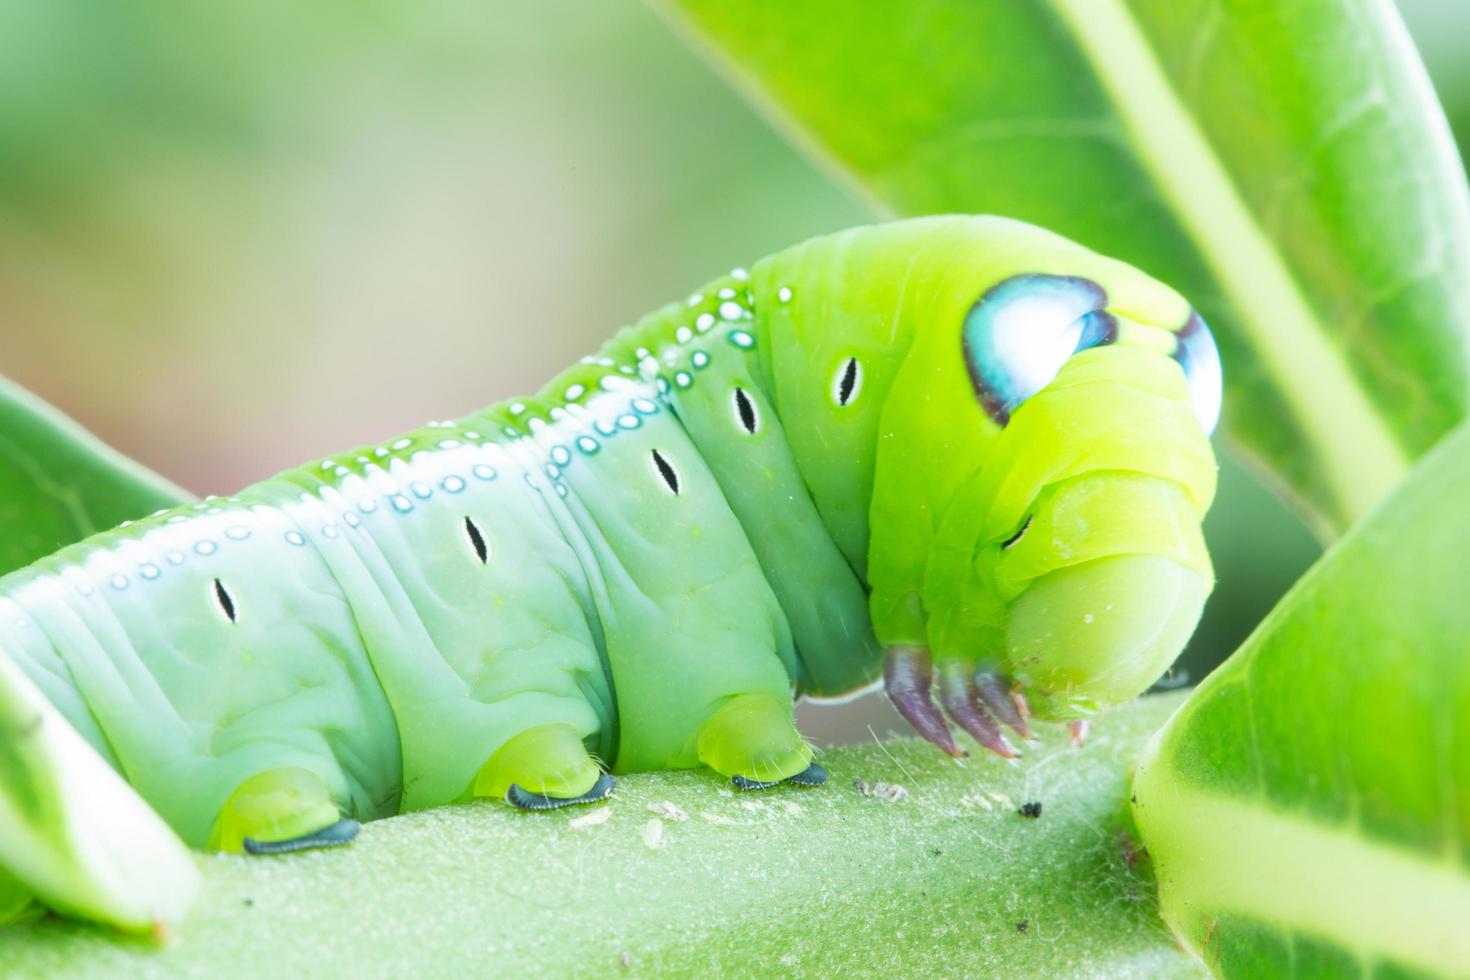 Caterpillar on a plant photo